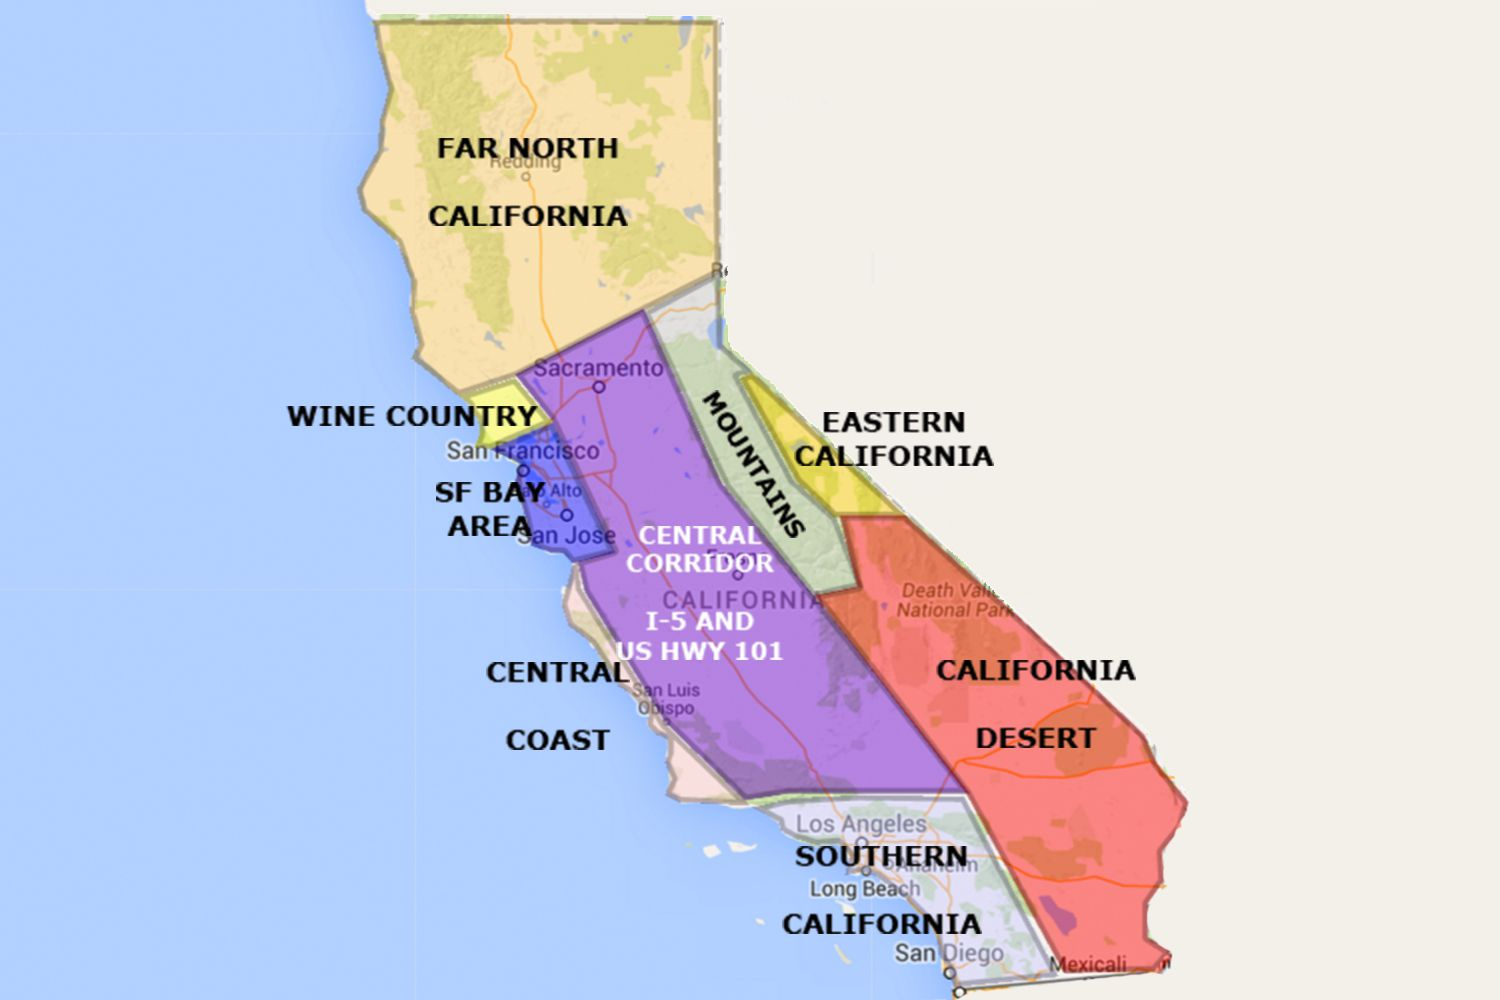 Best California Statearea And Regions Map - California Desert Map